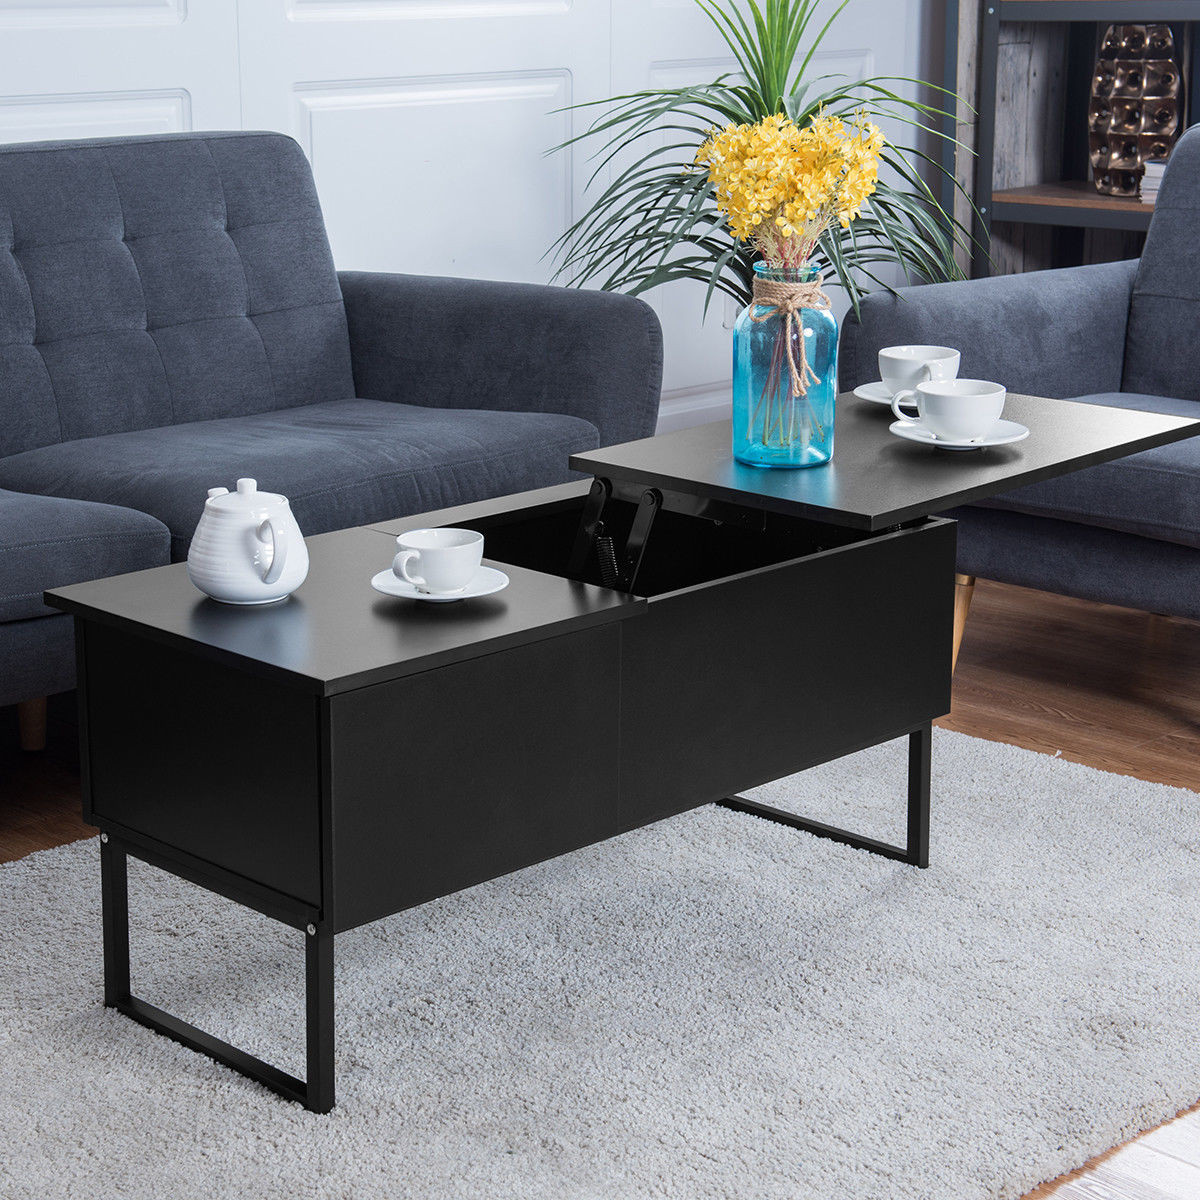 Living Room Tables
 Giantex Modern Coffee Table Lift Top Home Living Room Wood